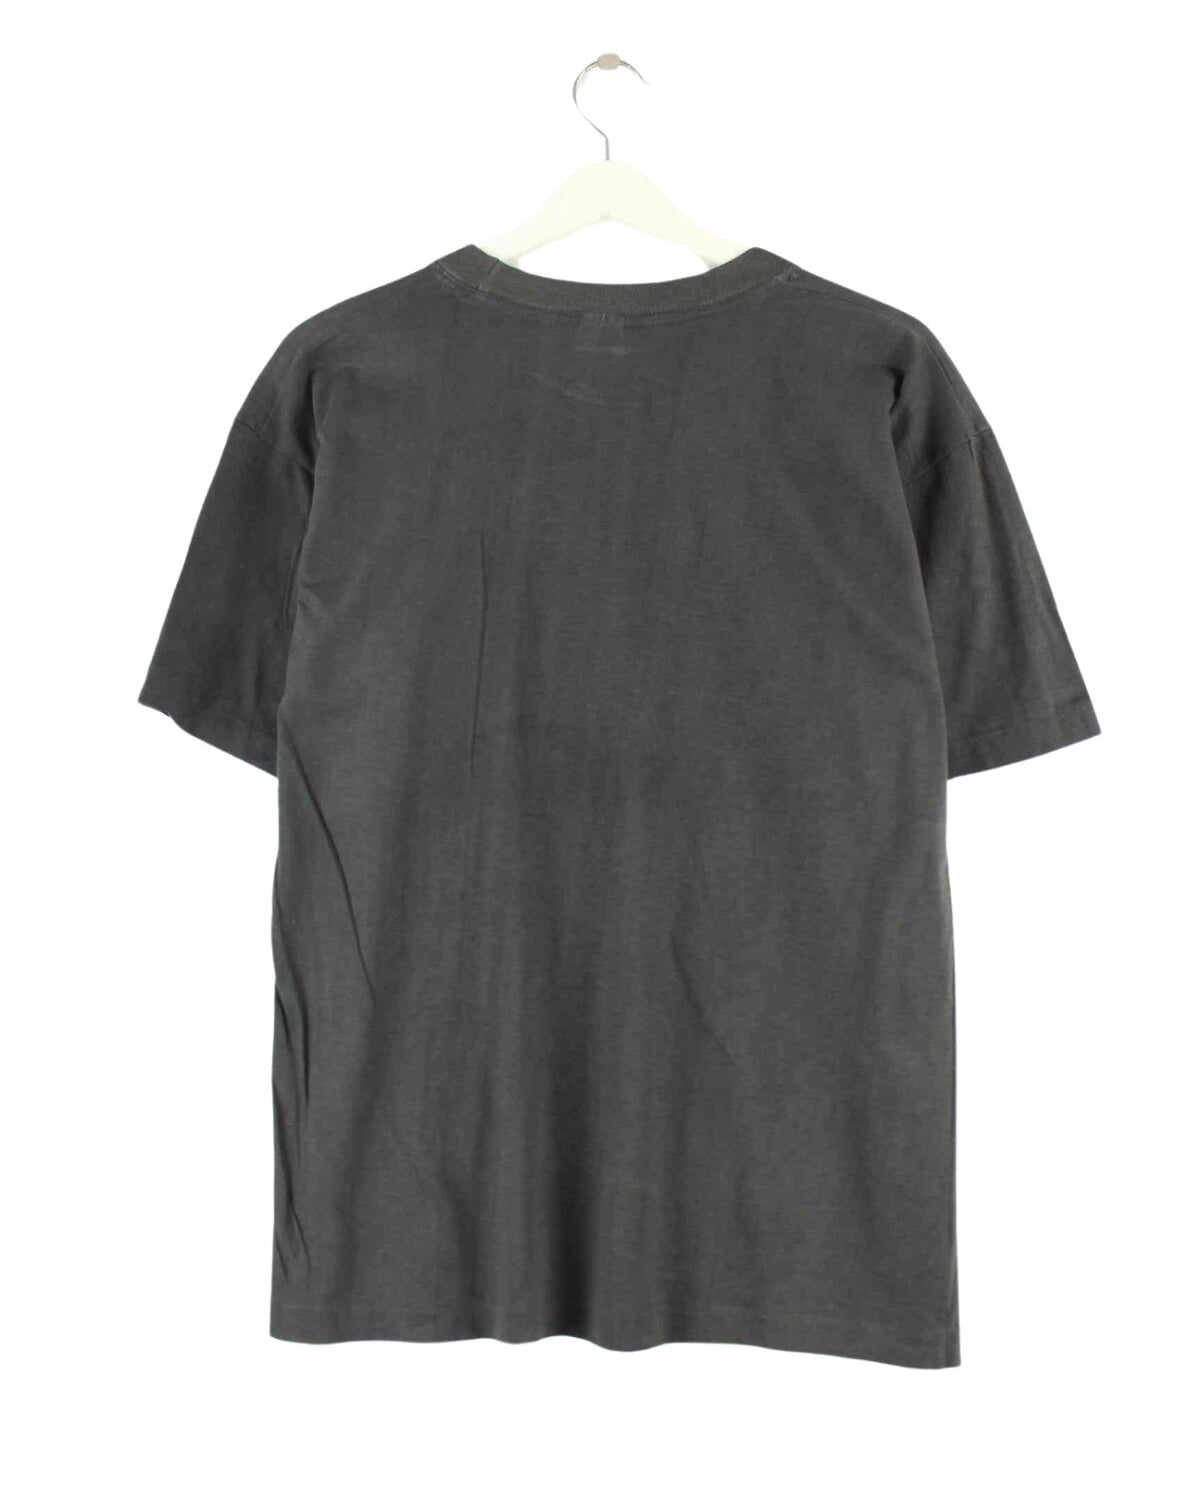 Vintage 90s Costa Del Sol Single Stiched T-Shirt Grau S (back image)